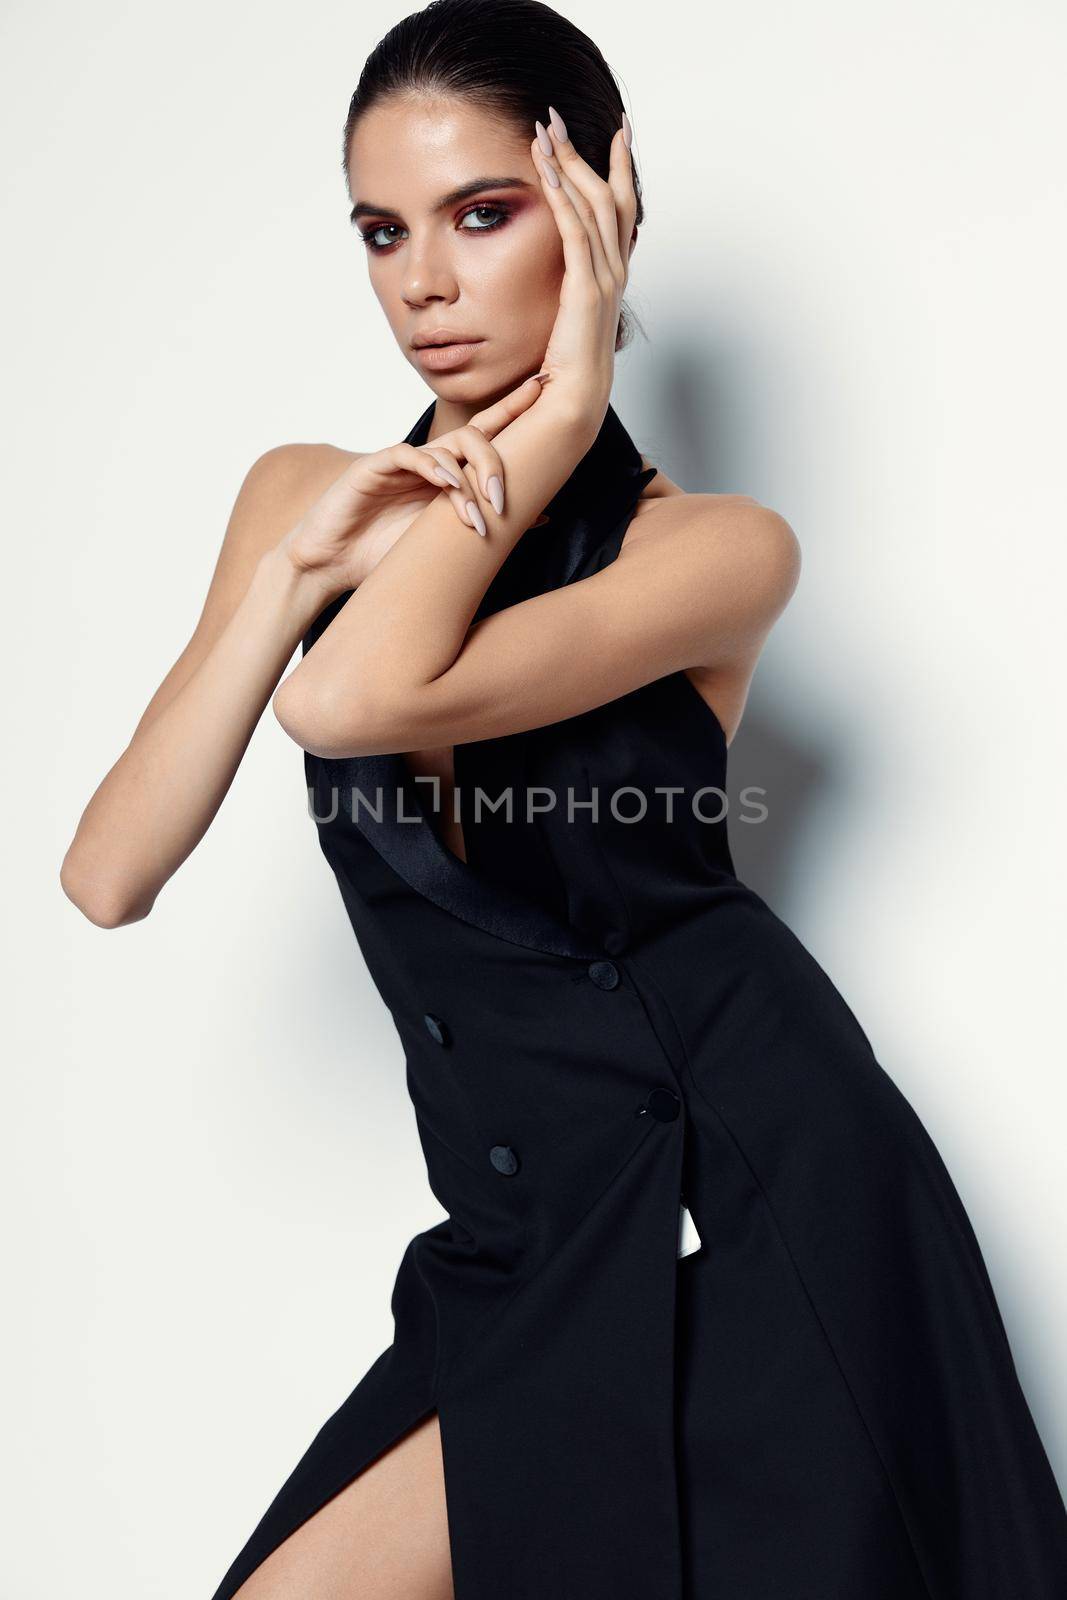 woman bright makeup black dresses fashion modern style. High quality photo